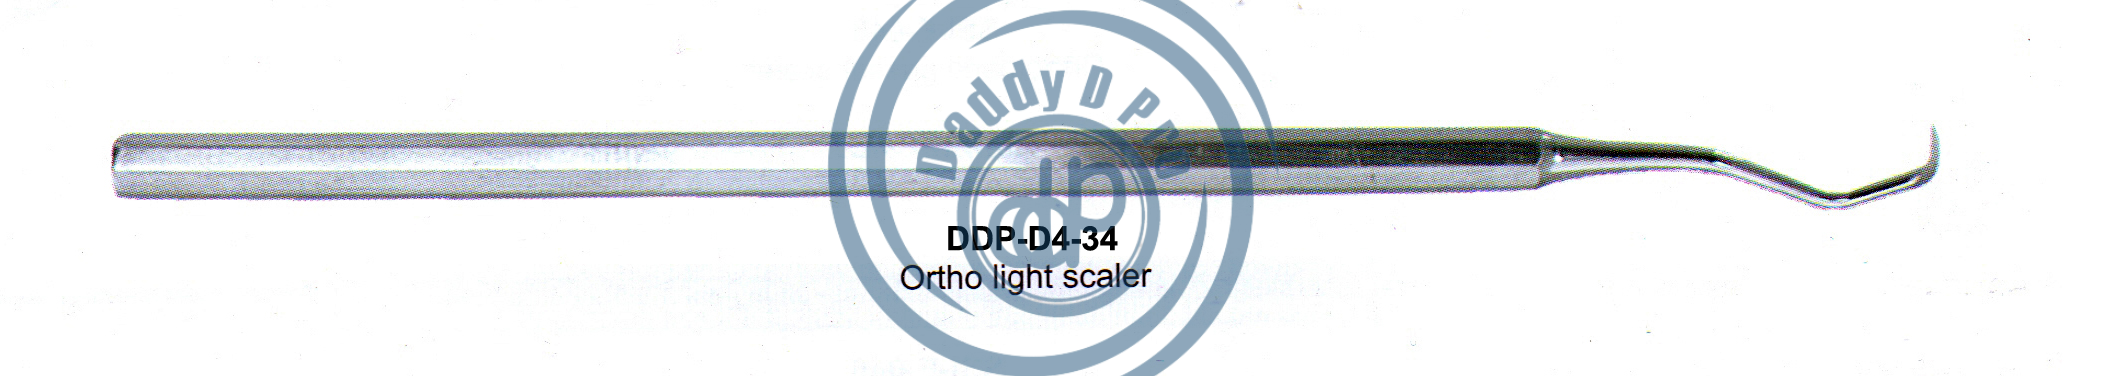 images/DDP-D4-34.png